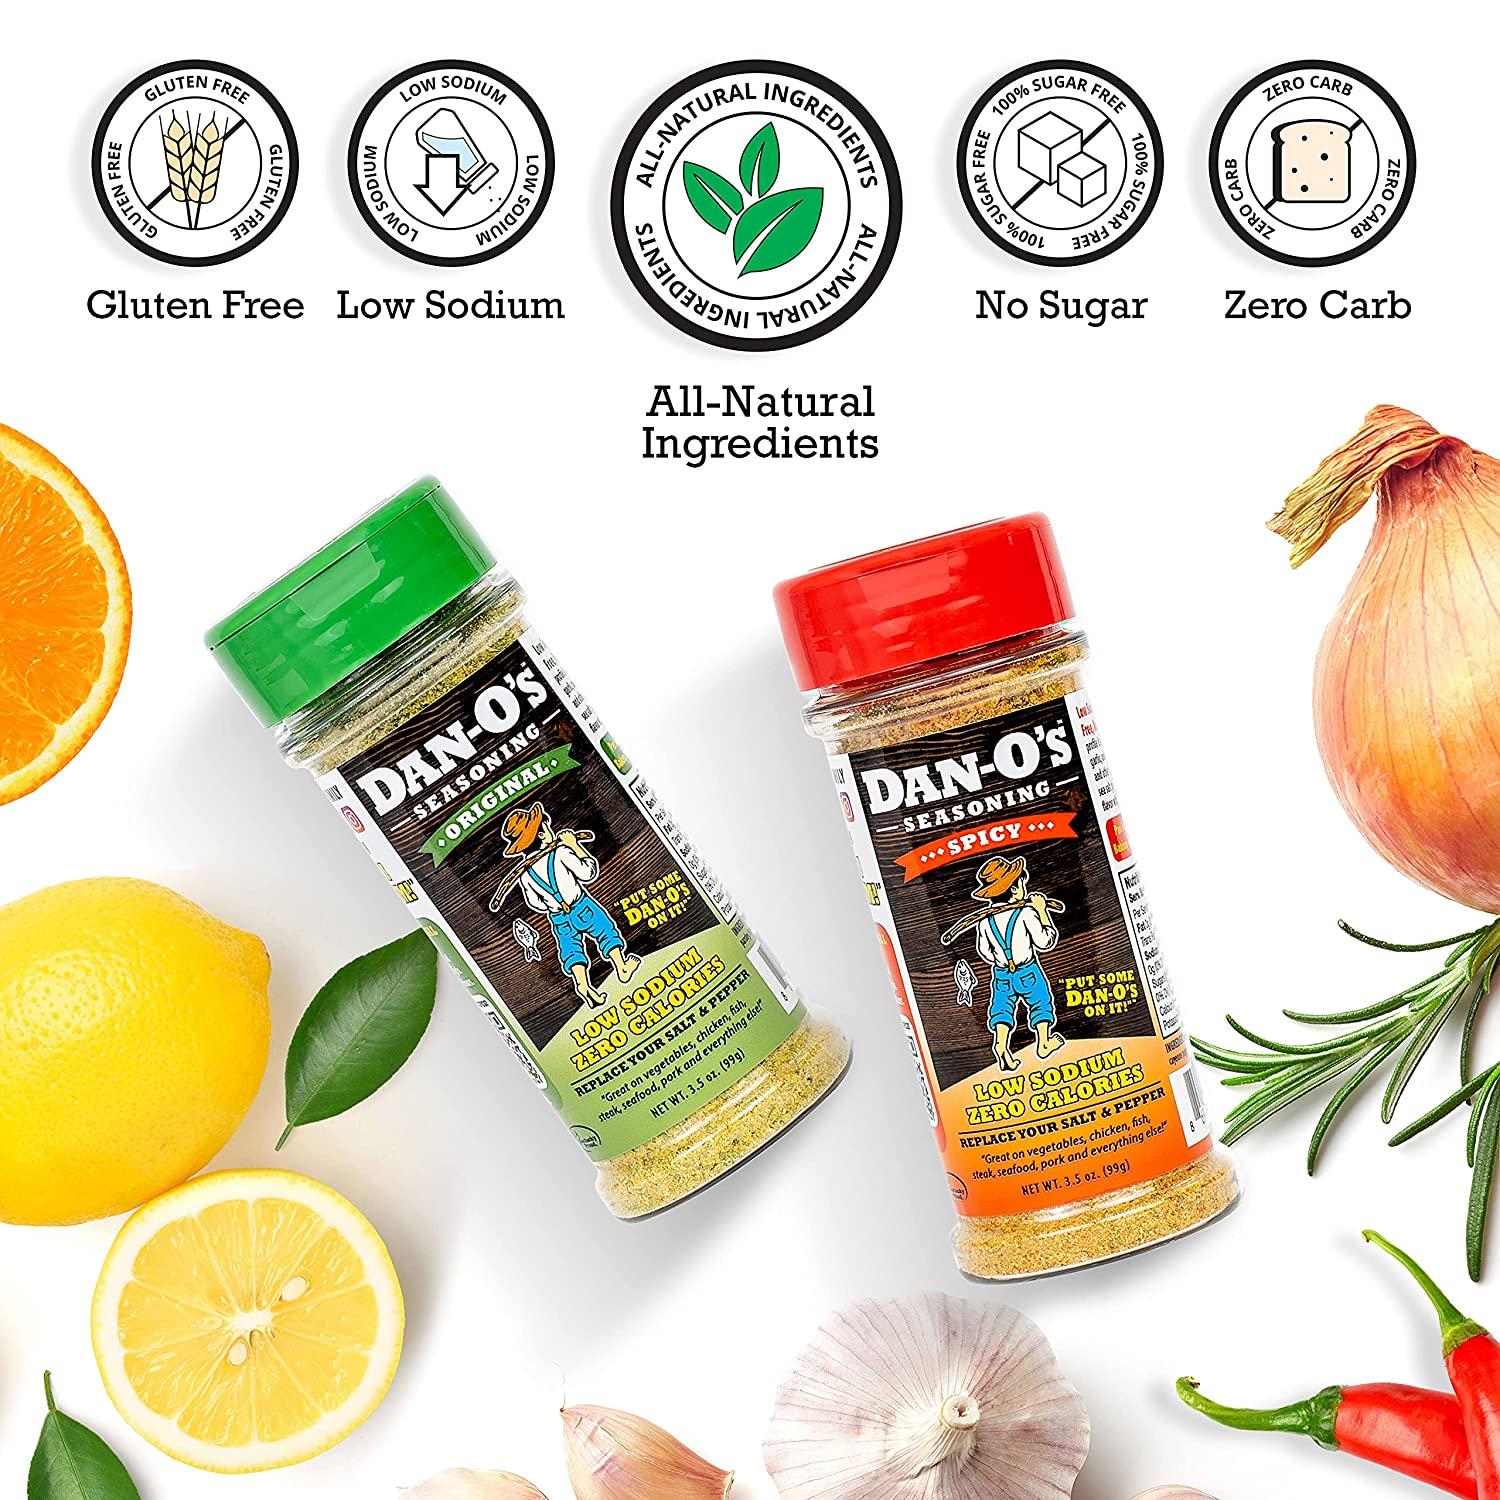 Dan-O's Original Seasoning  Low sugar diet, Low glycemic diet, Lemon juice  benefits